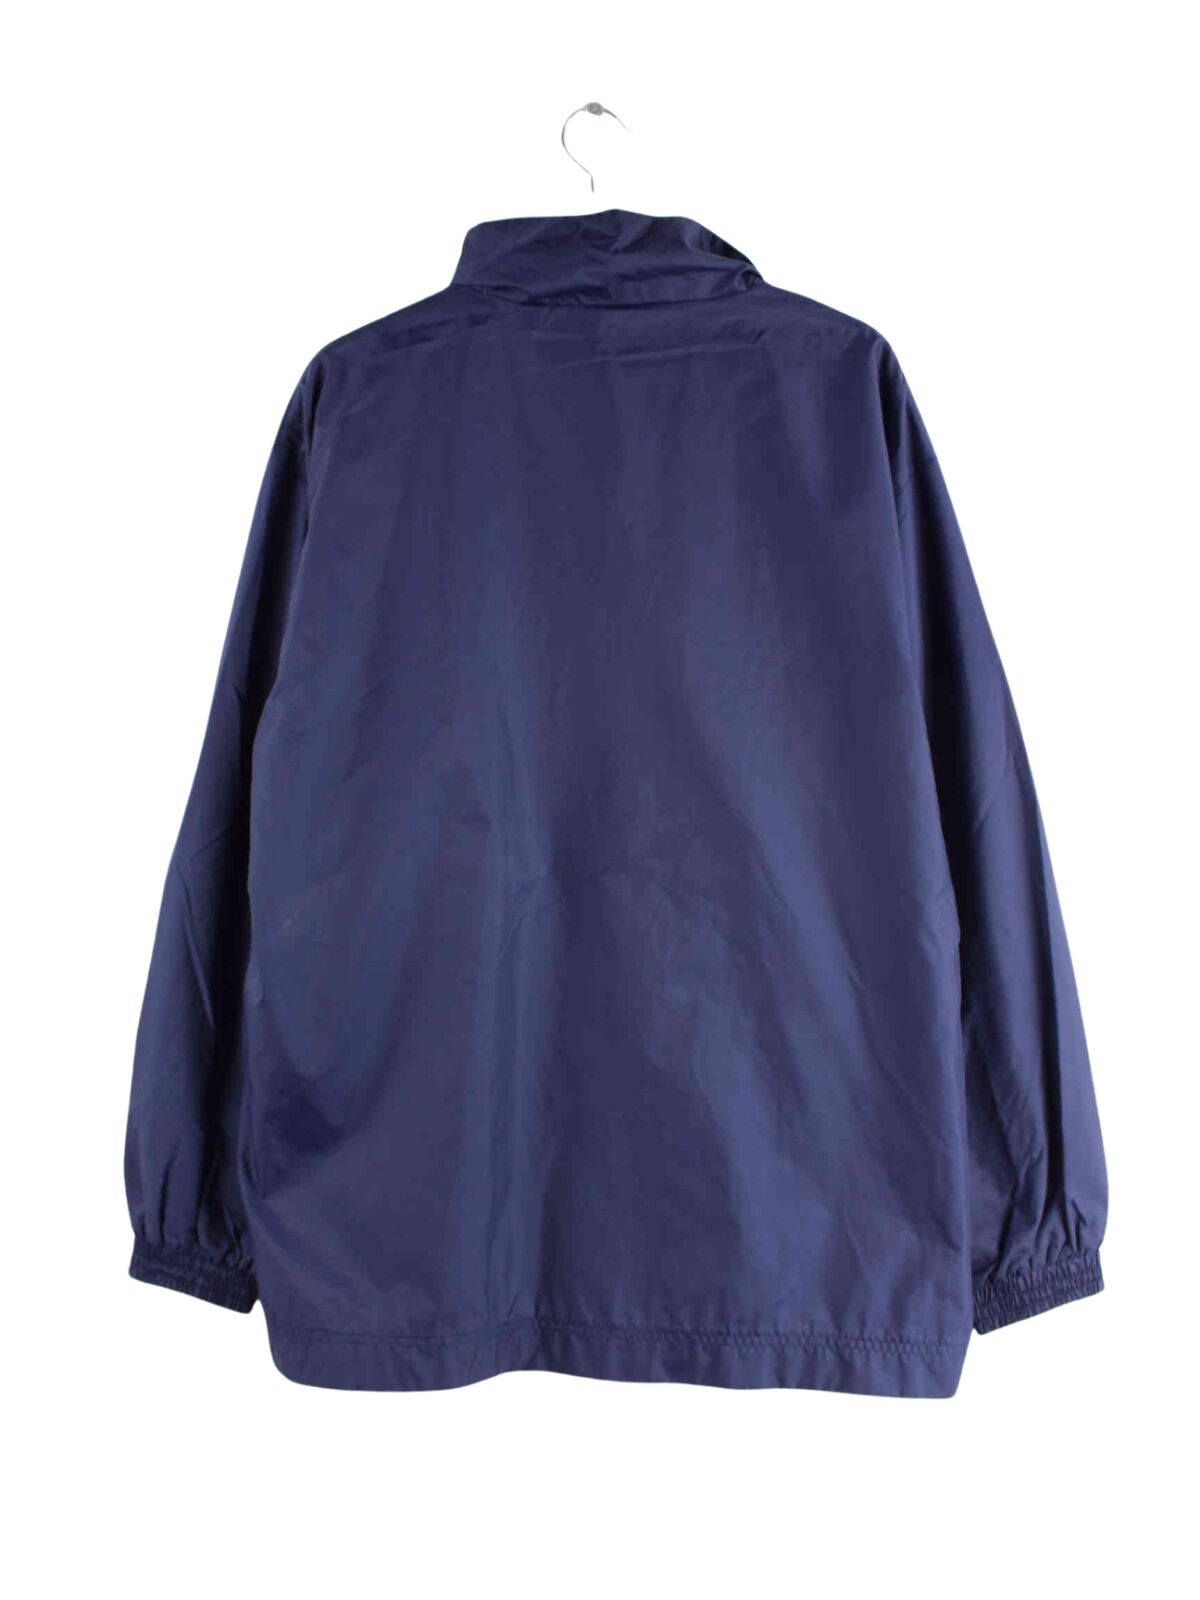 Fila 90s Vintage Embroidered Jacke Blau L (back image)